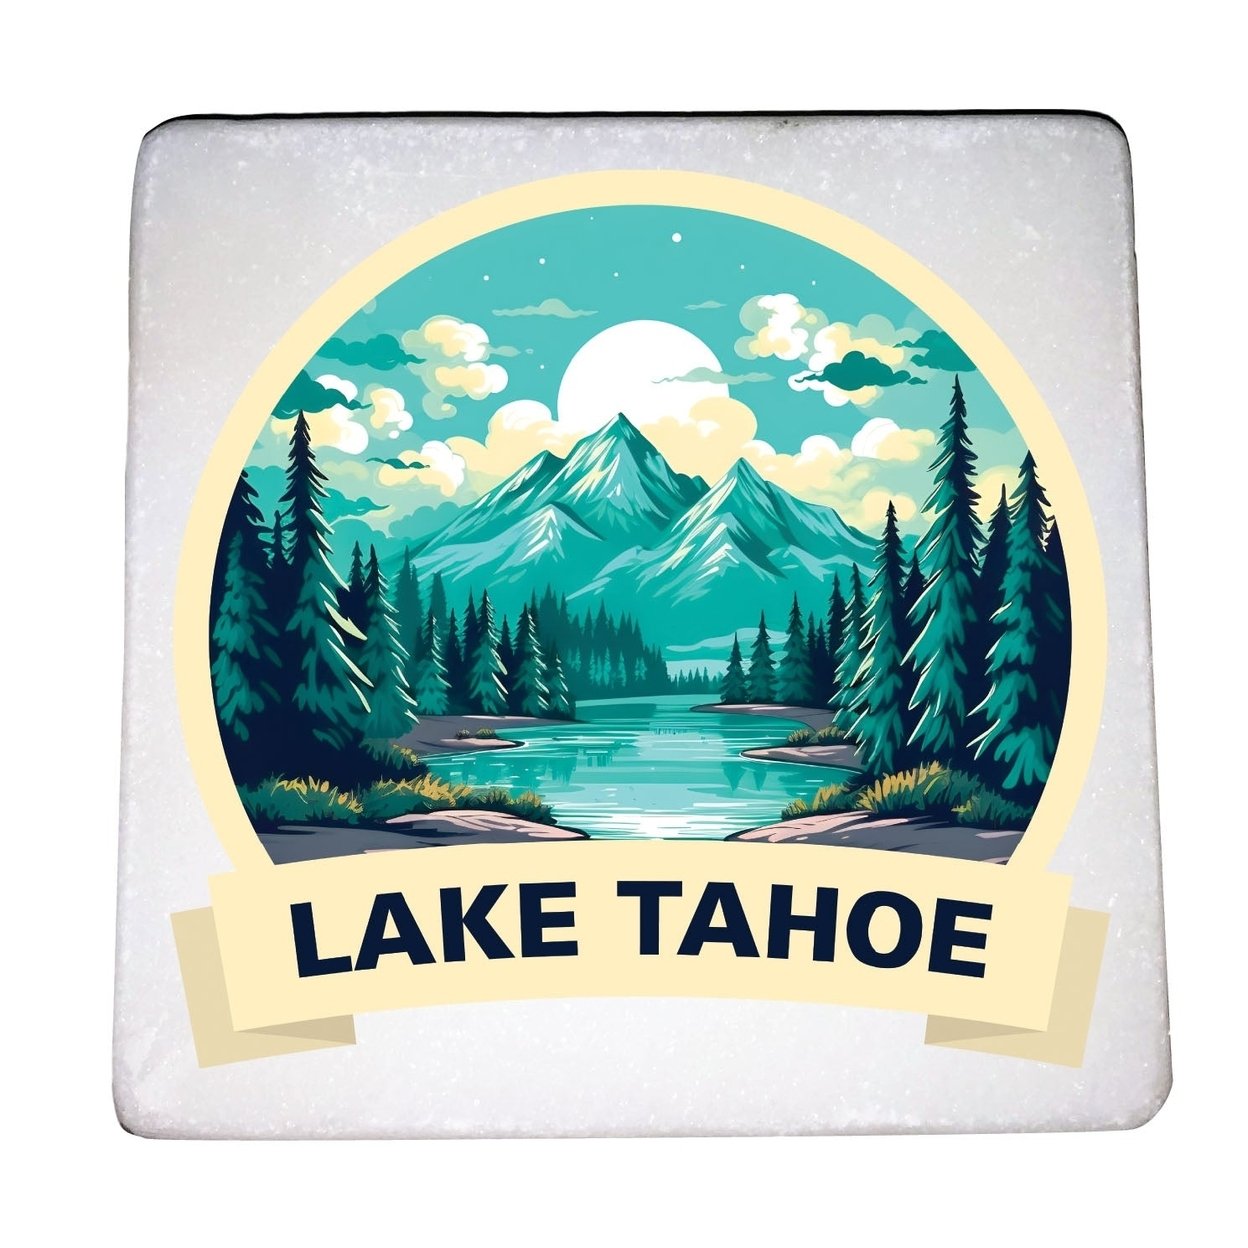 Lake Tahoe California Design A Souvenir 4x4-Inch Coaster Marble 4 Pack